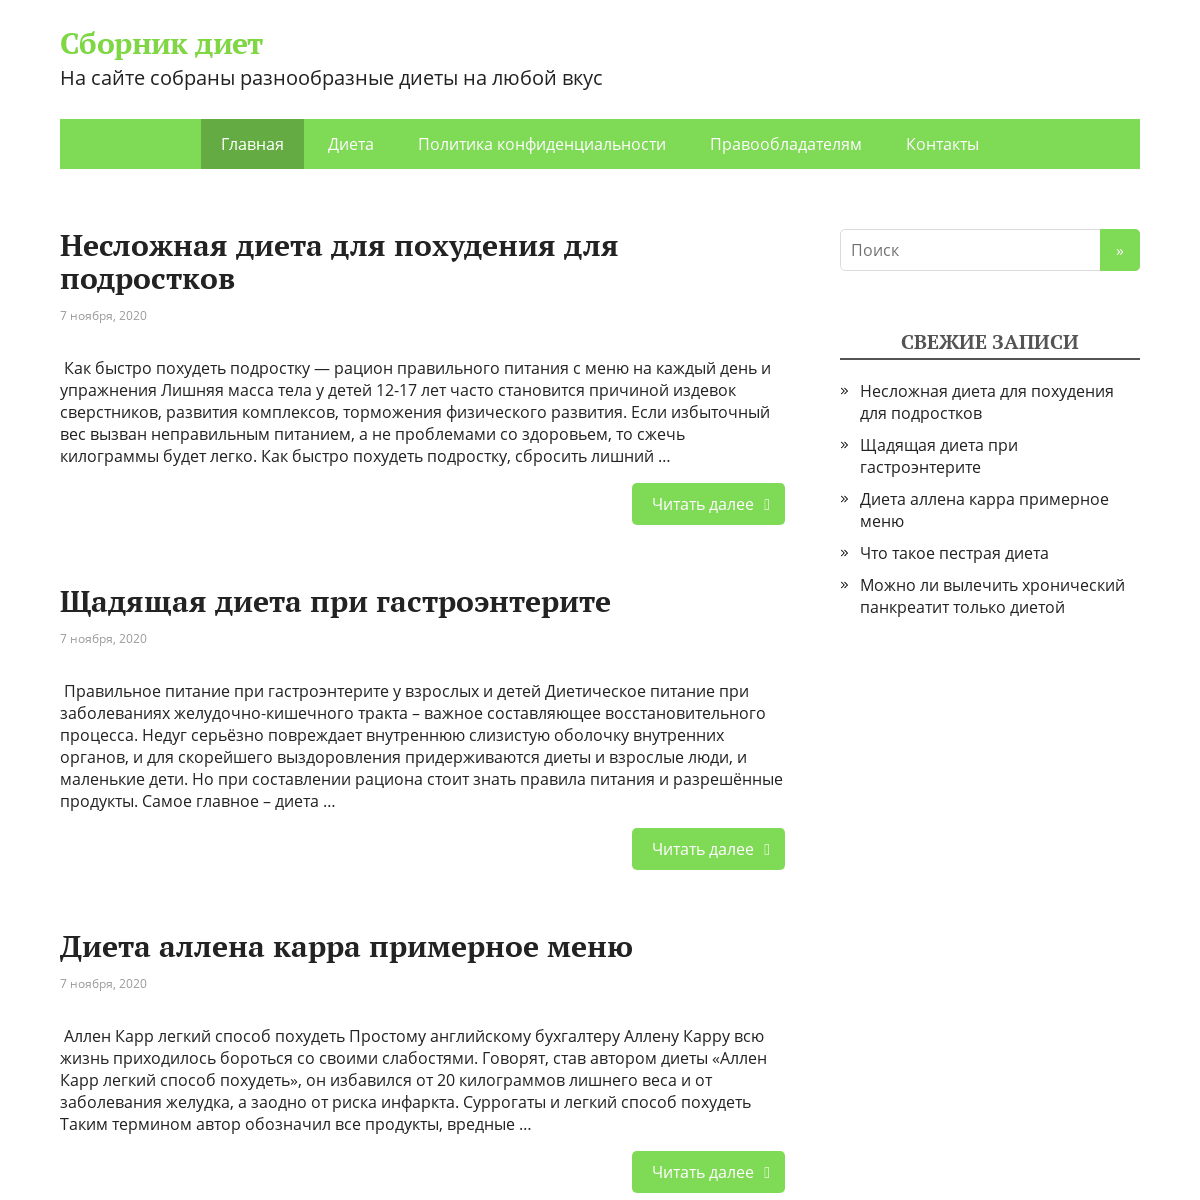 A complete backup of https://posovetuymne.ru